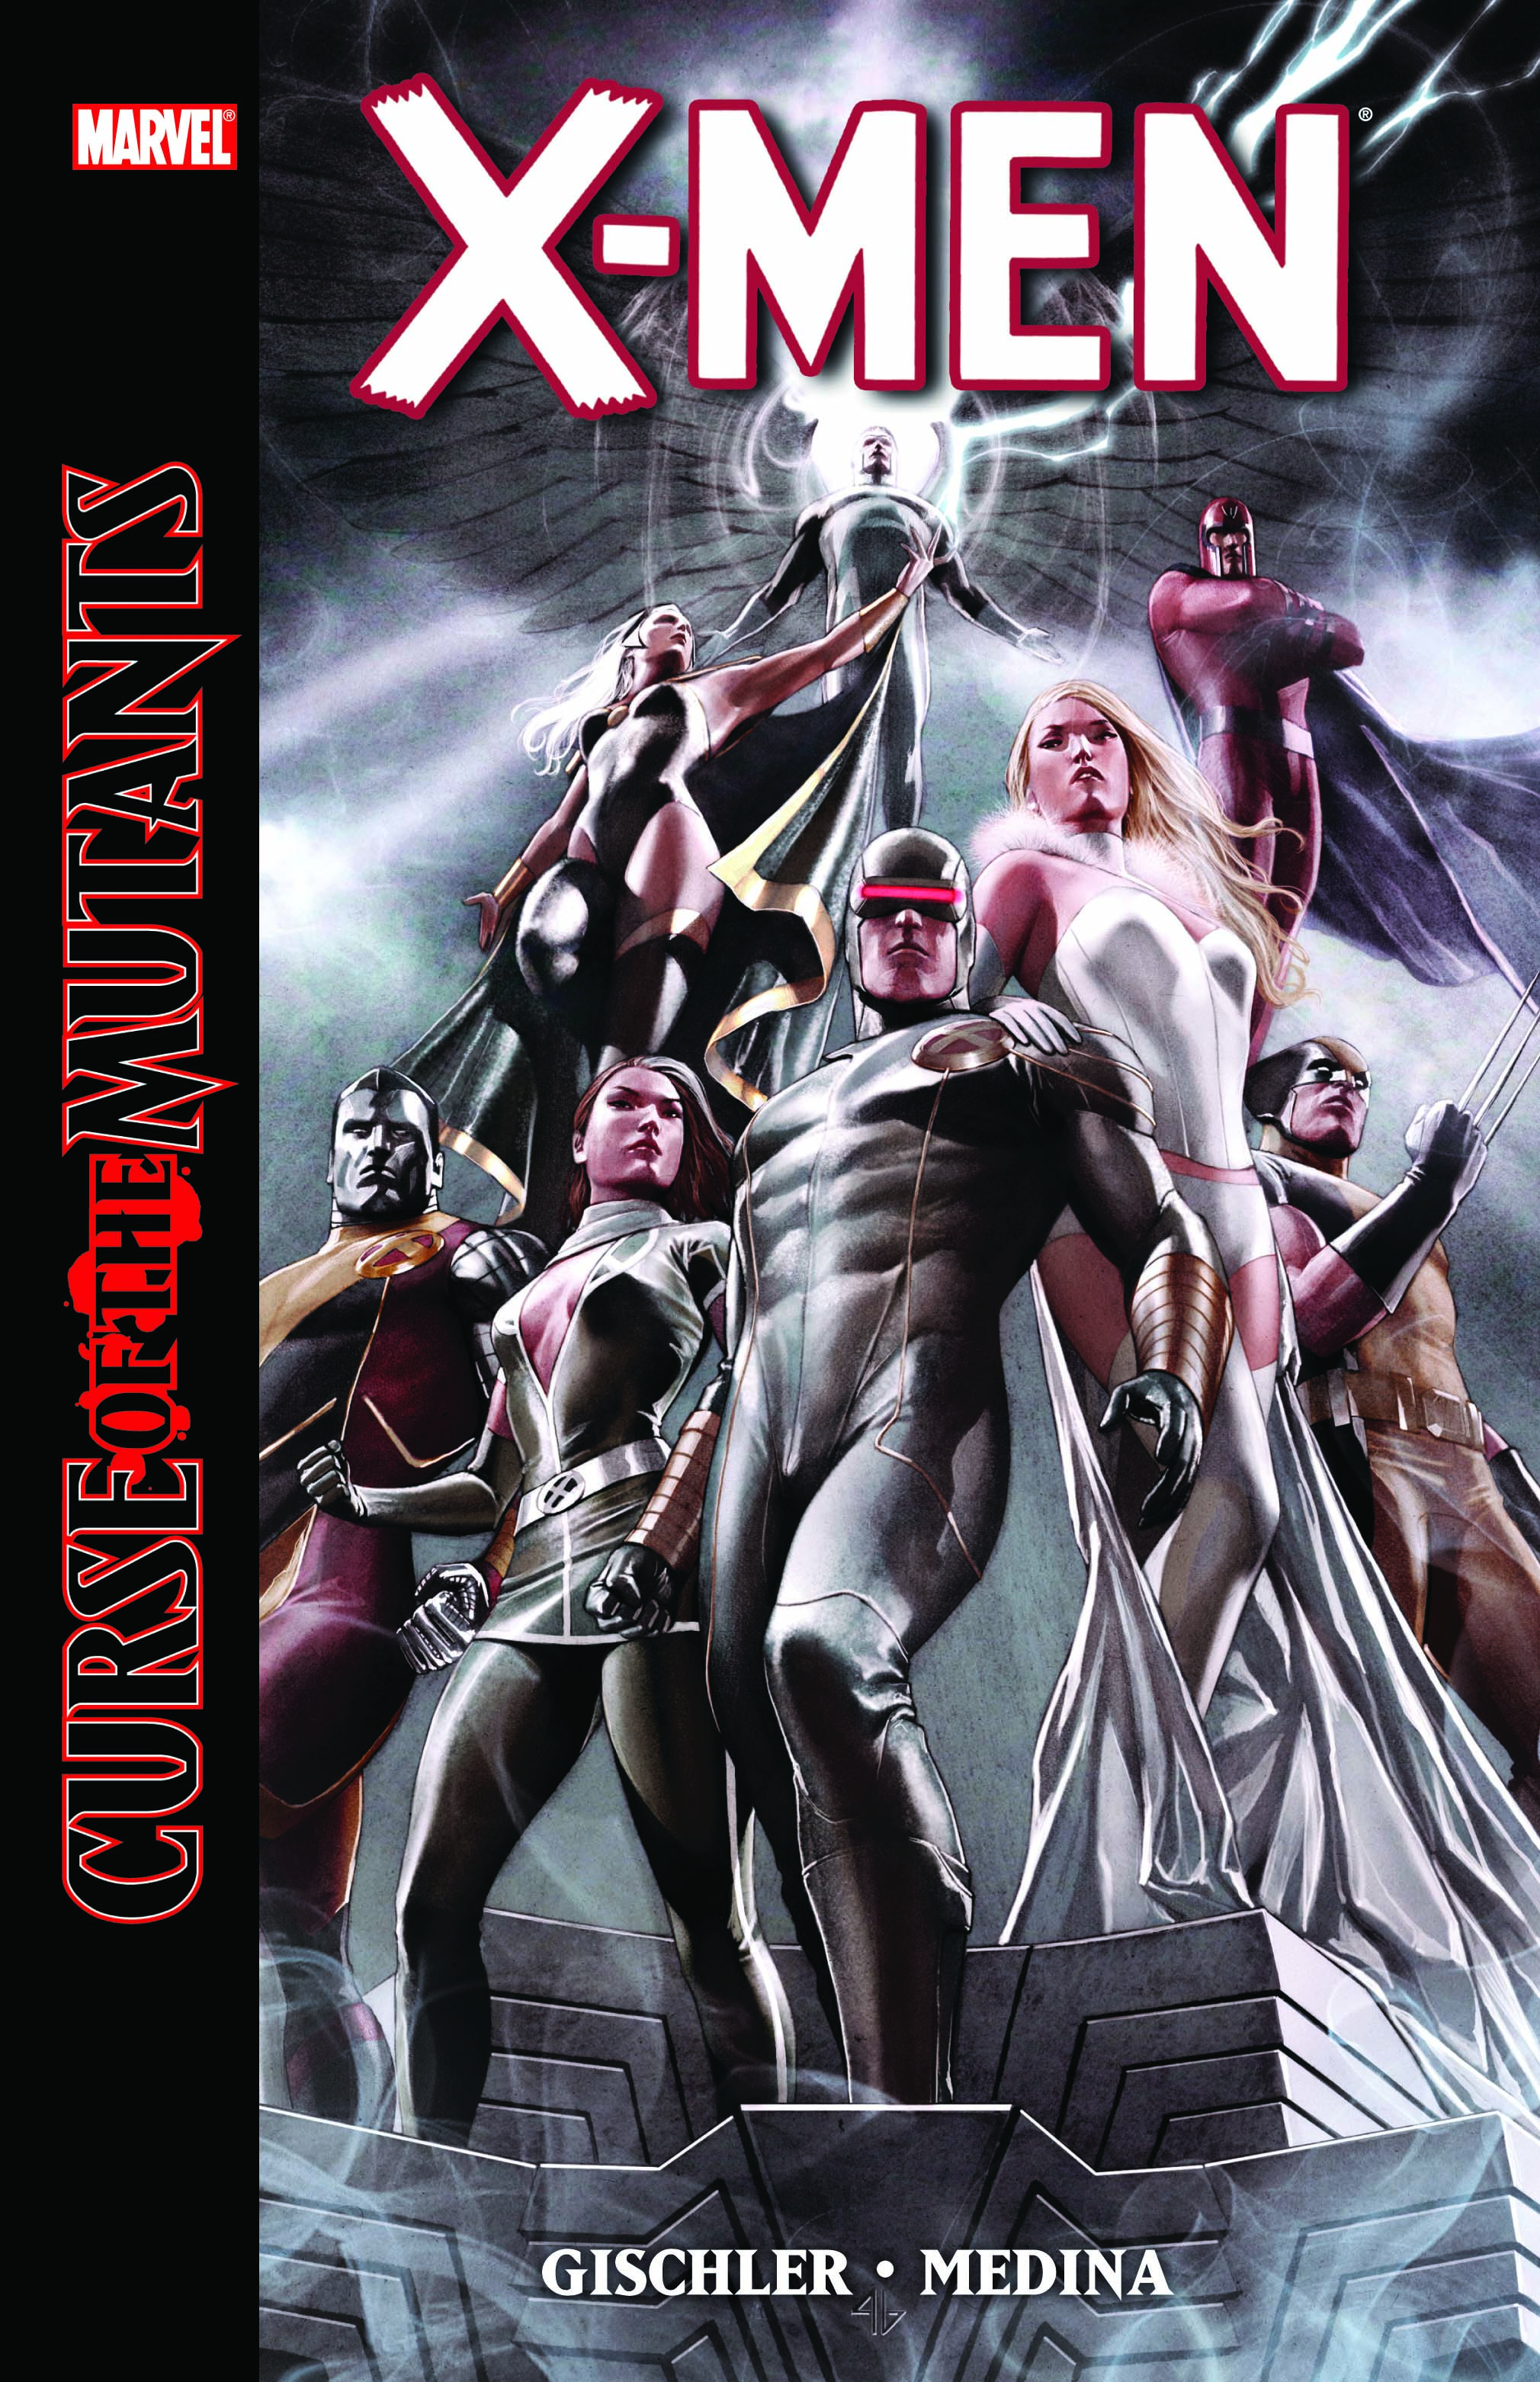 X-Men: Curse of the Mutants  (Trade Paperback)